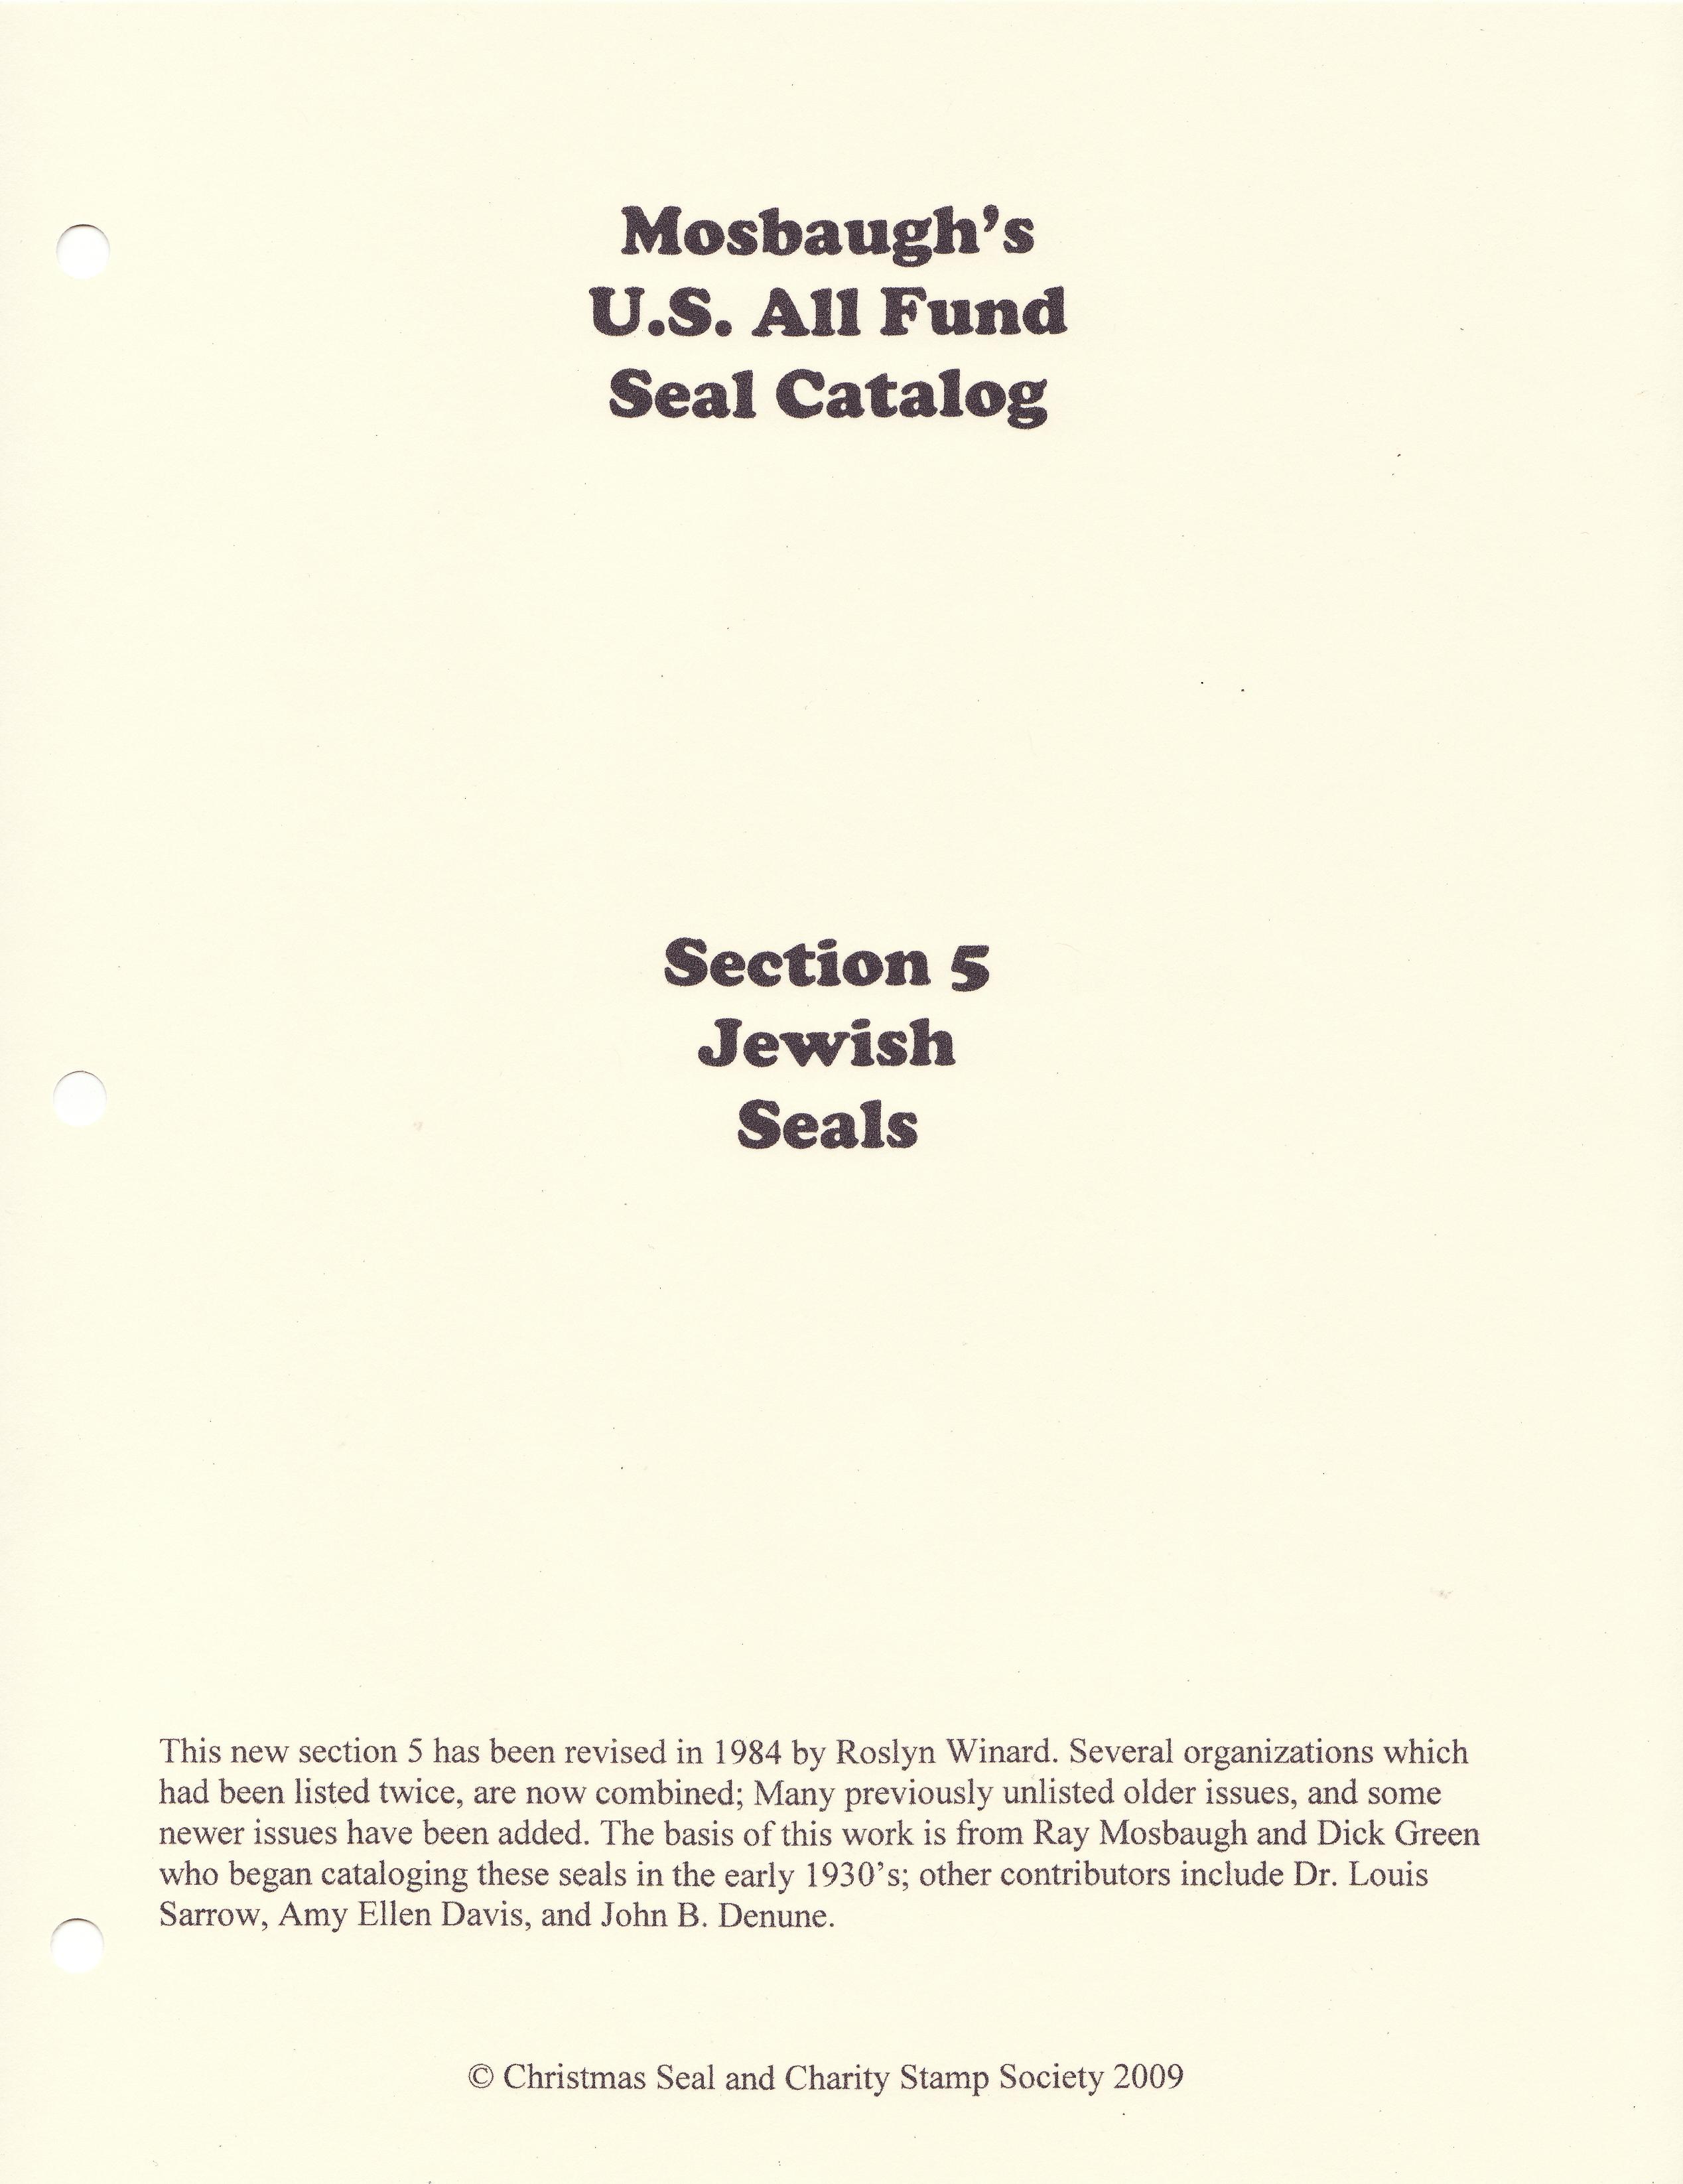 Mosbaugh's Catalog, Sec. 5, Jewish Charity Seals, 1962 ed., Rev. 1984